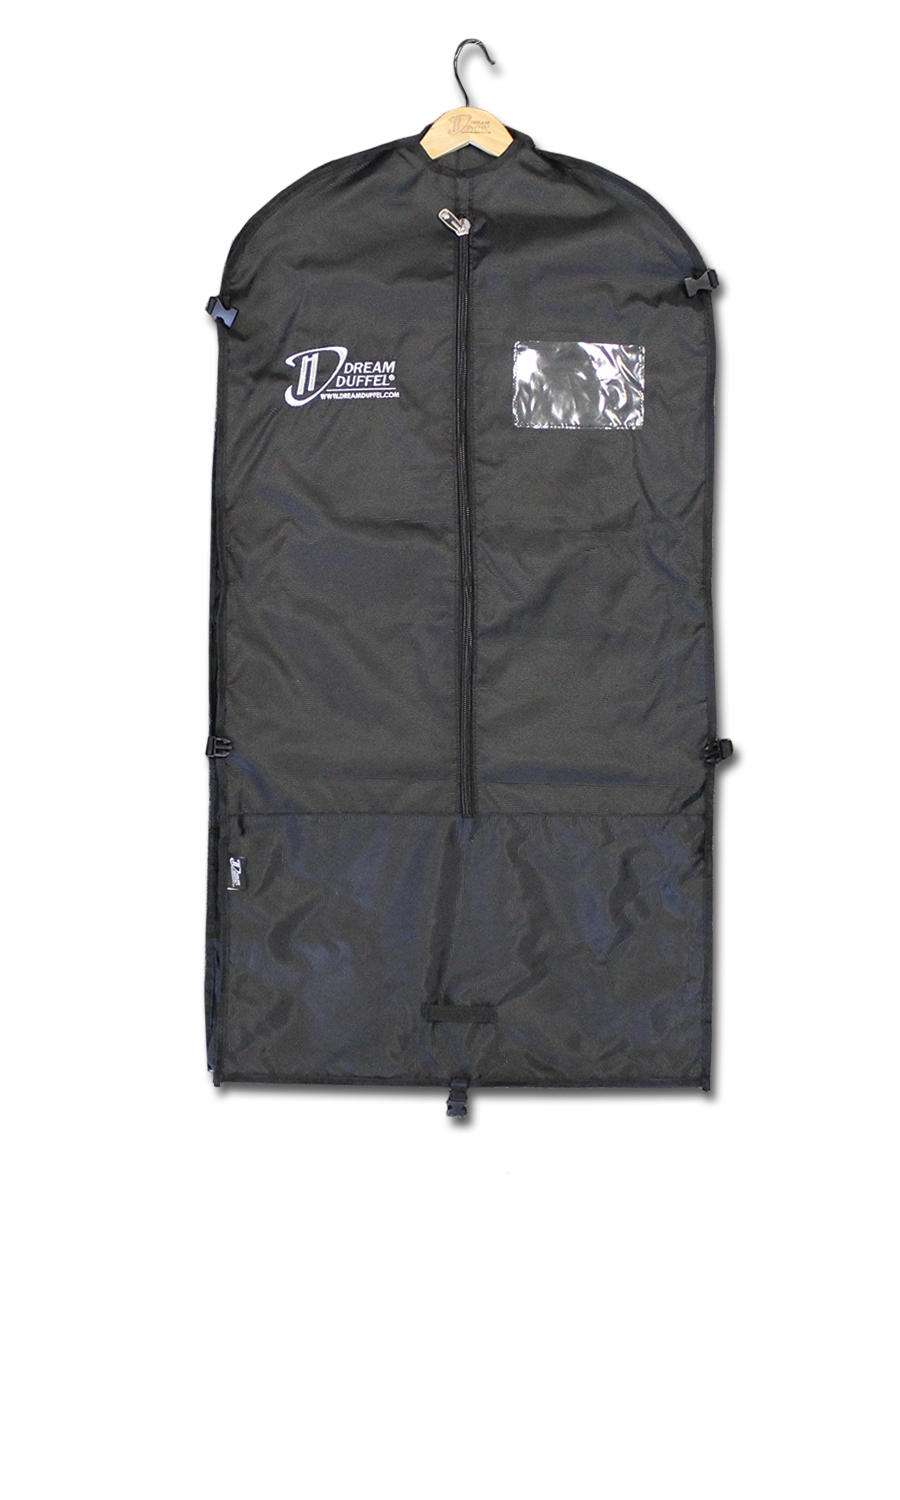 Dream Duffel Omnia Garment Bag with Hanger Short 